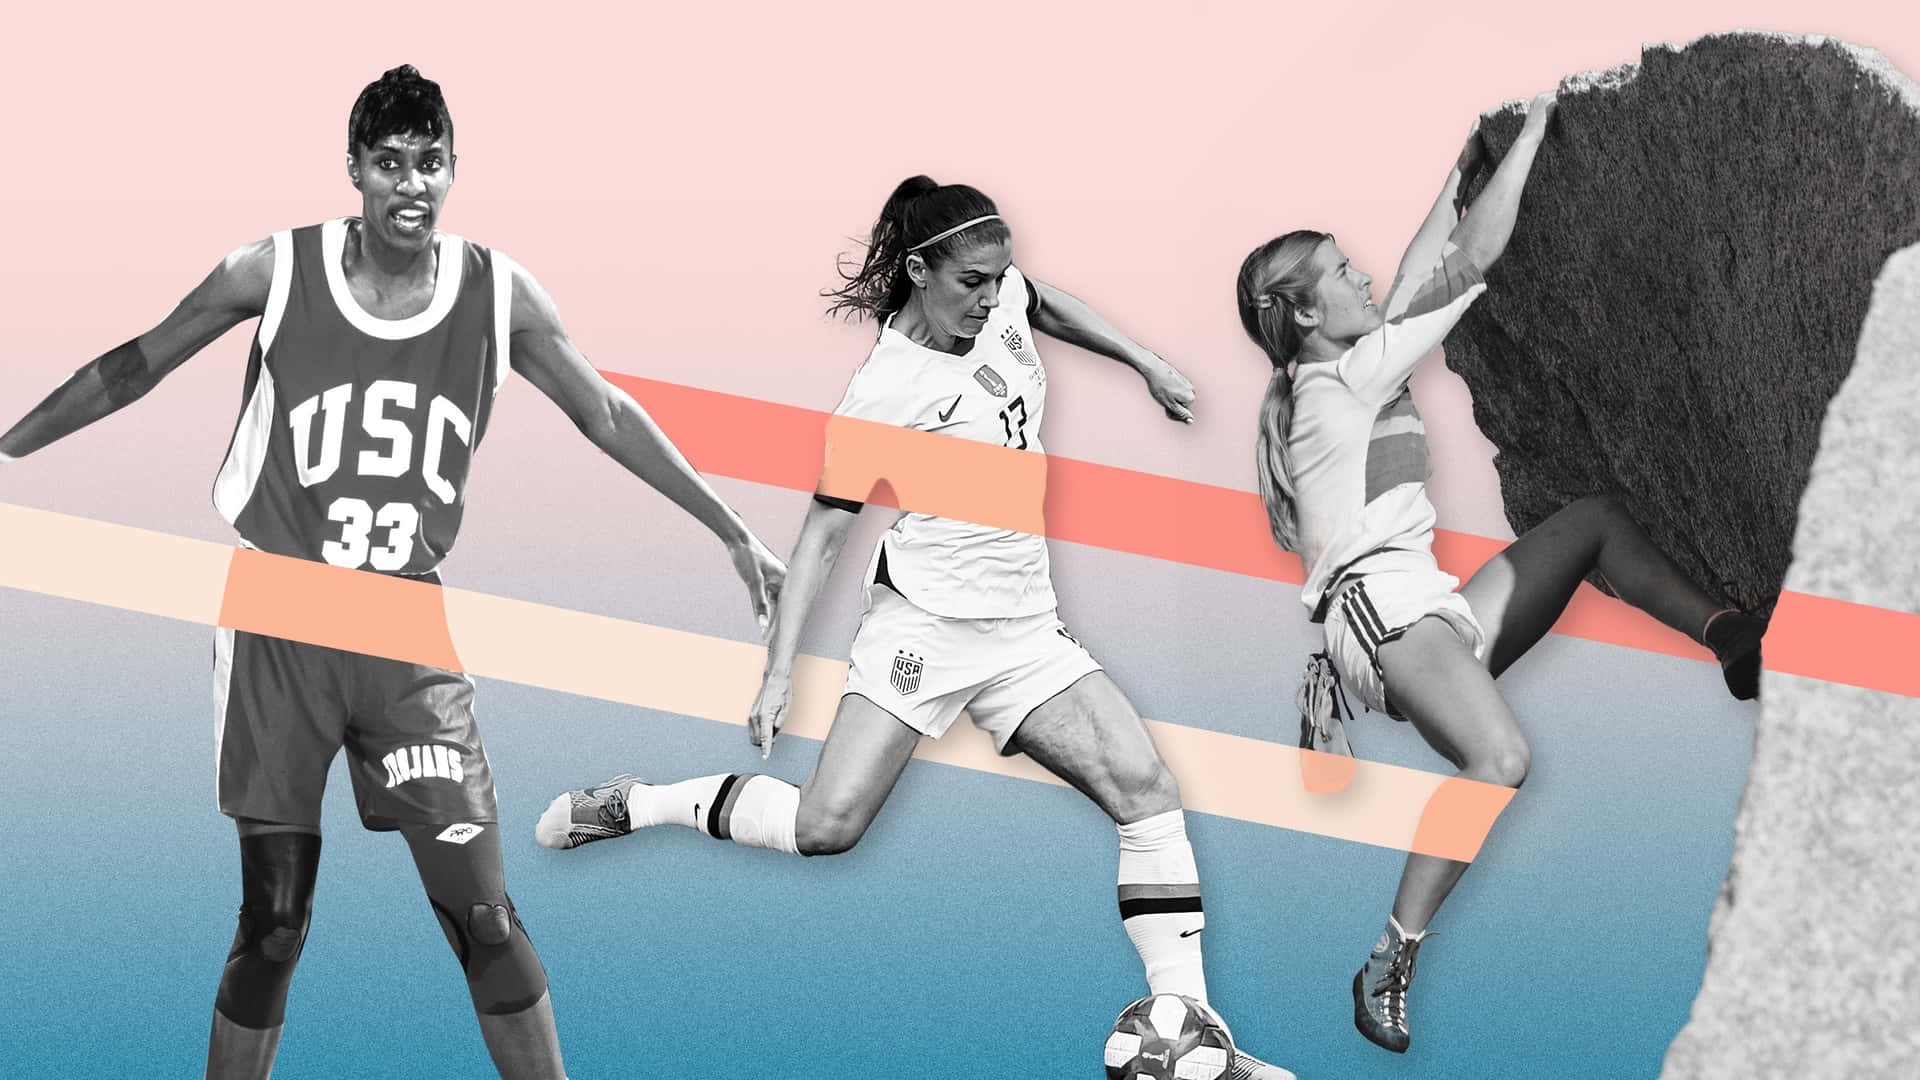 Powerful Female Athletes Digital Art Wallpaper